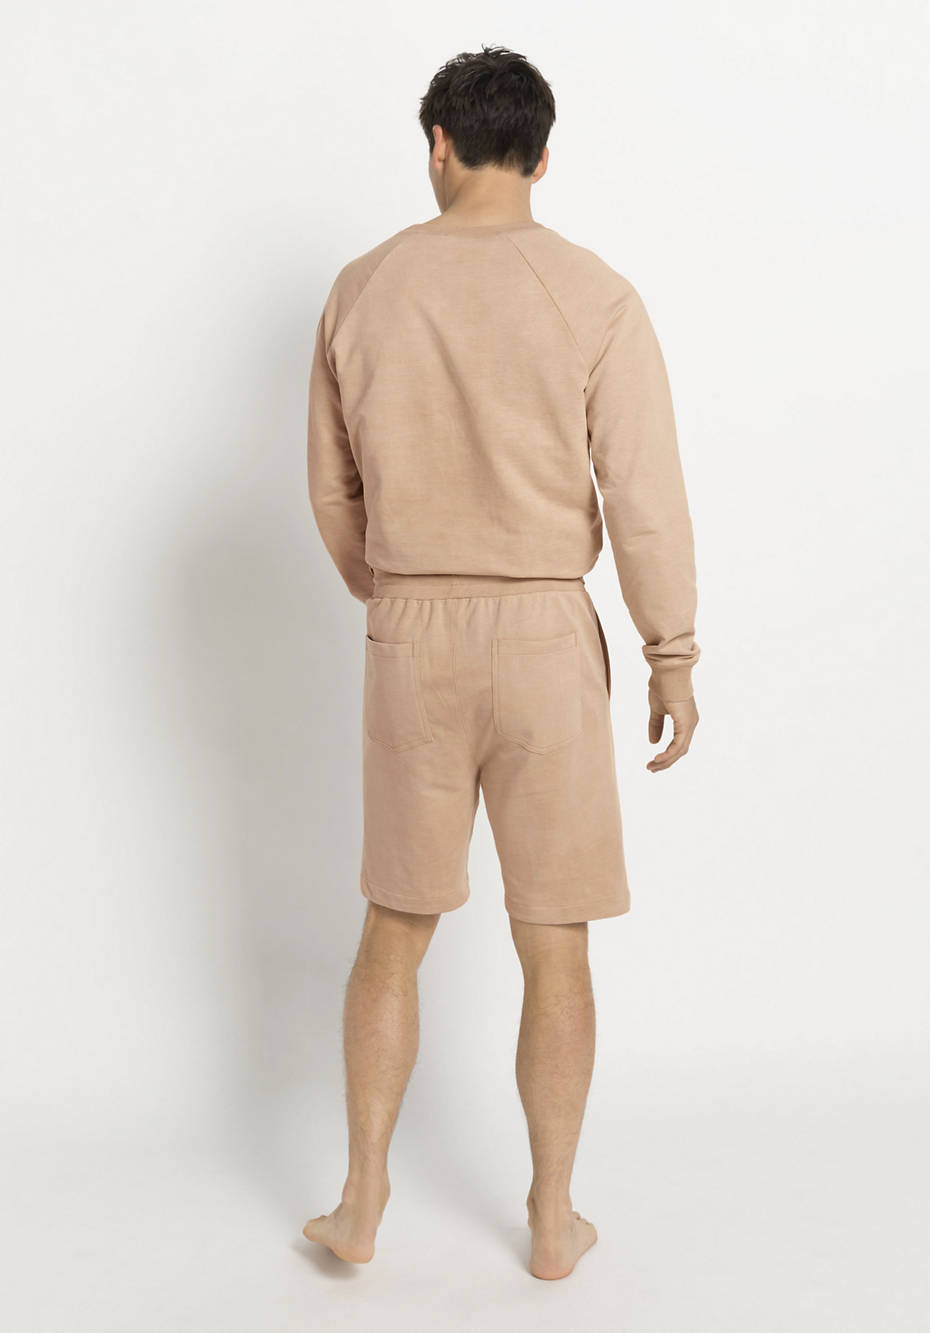 Sweat-Shorts aus Bio-Baumwolle mit Kapok